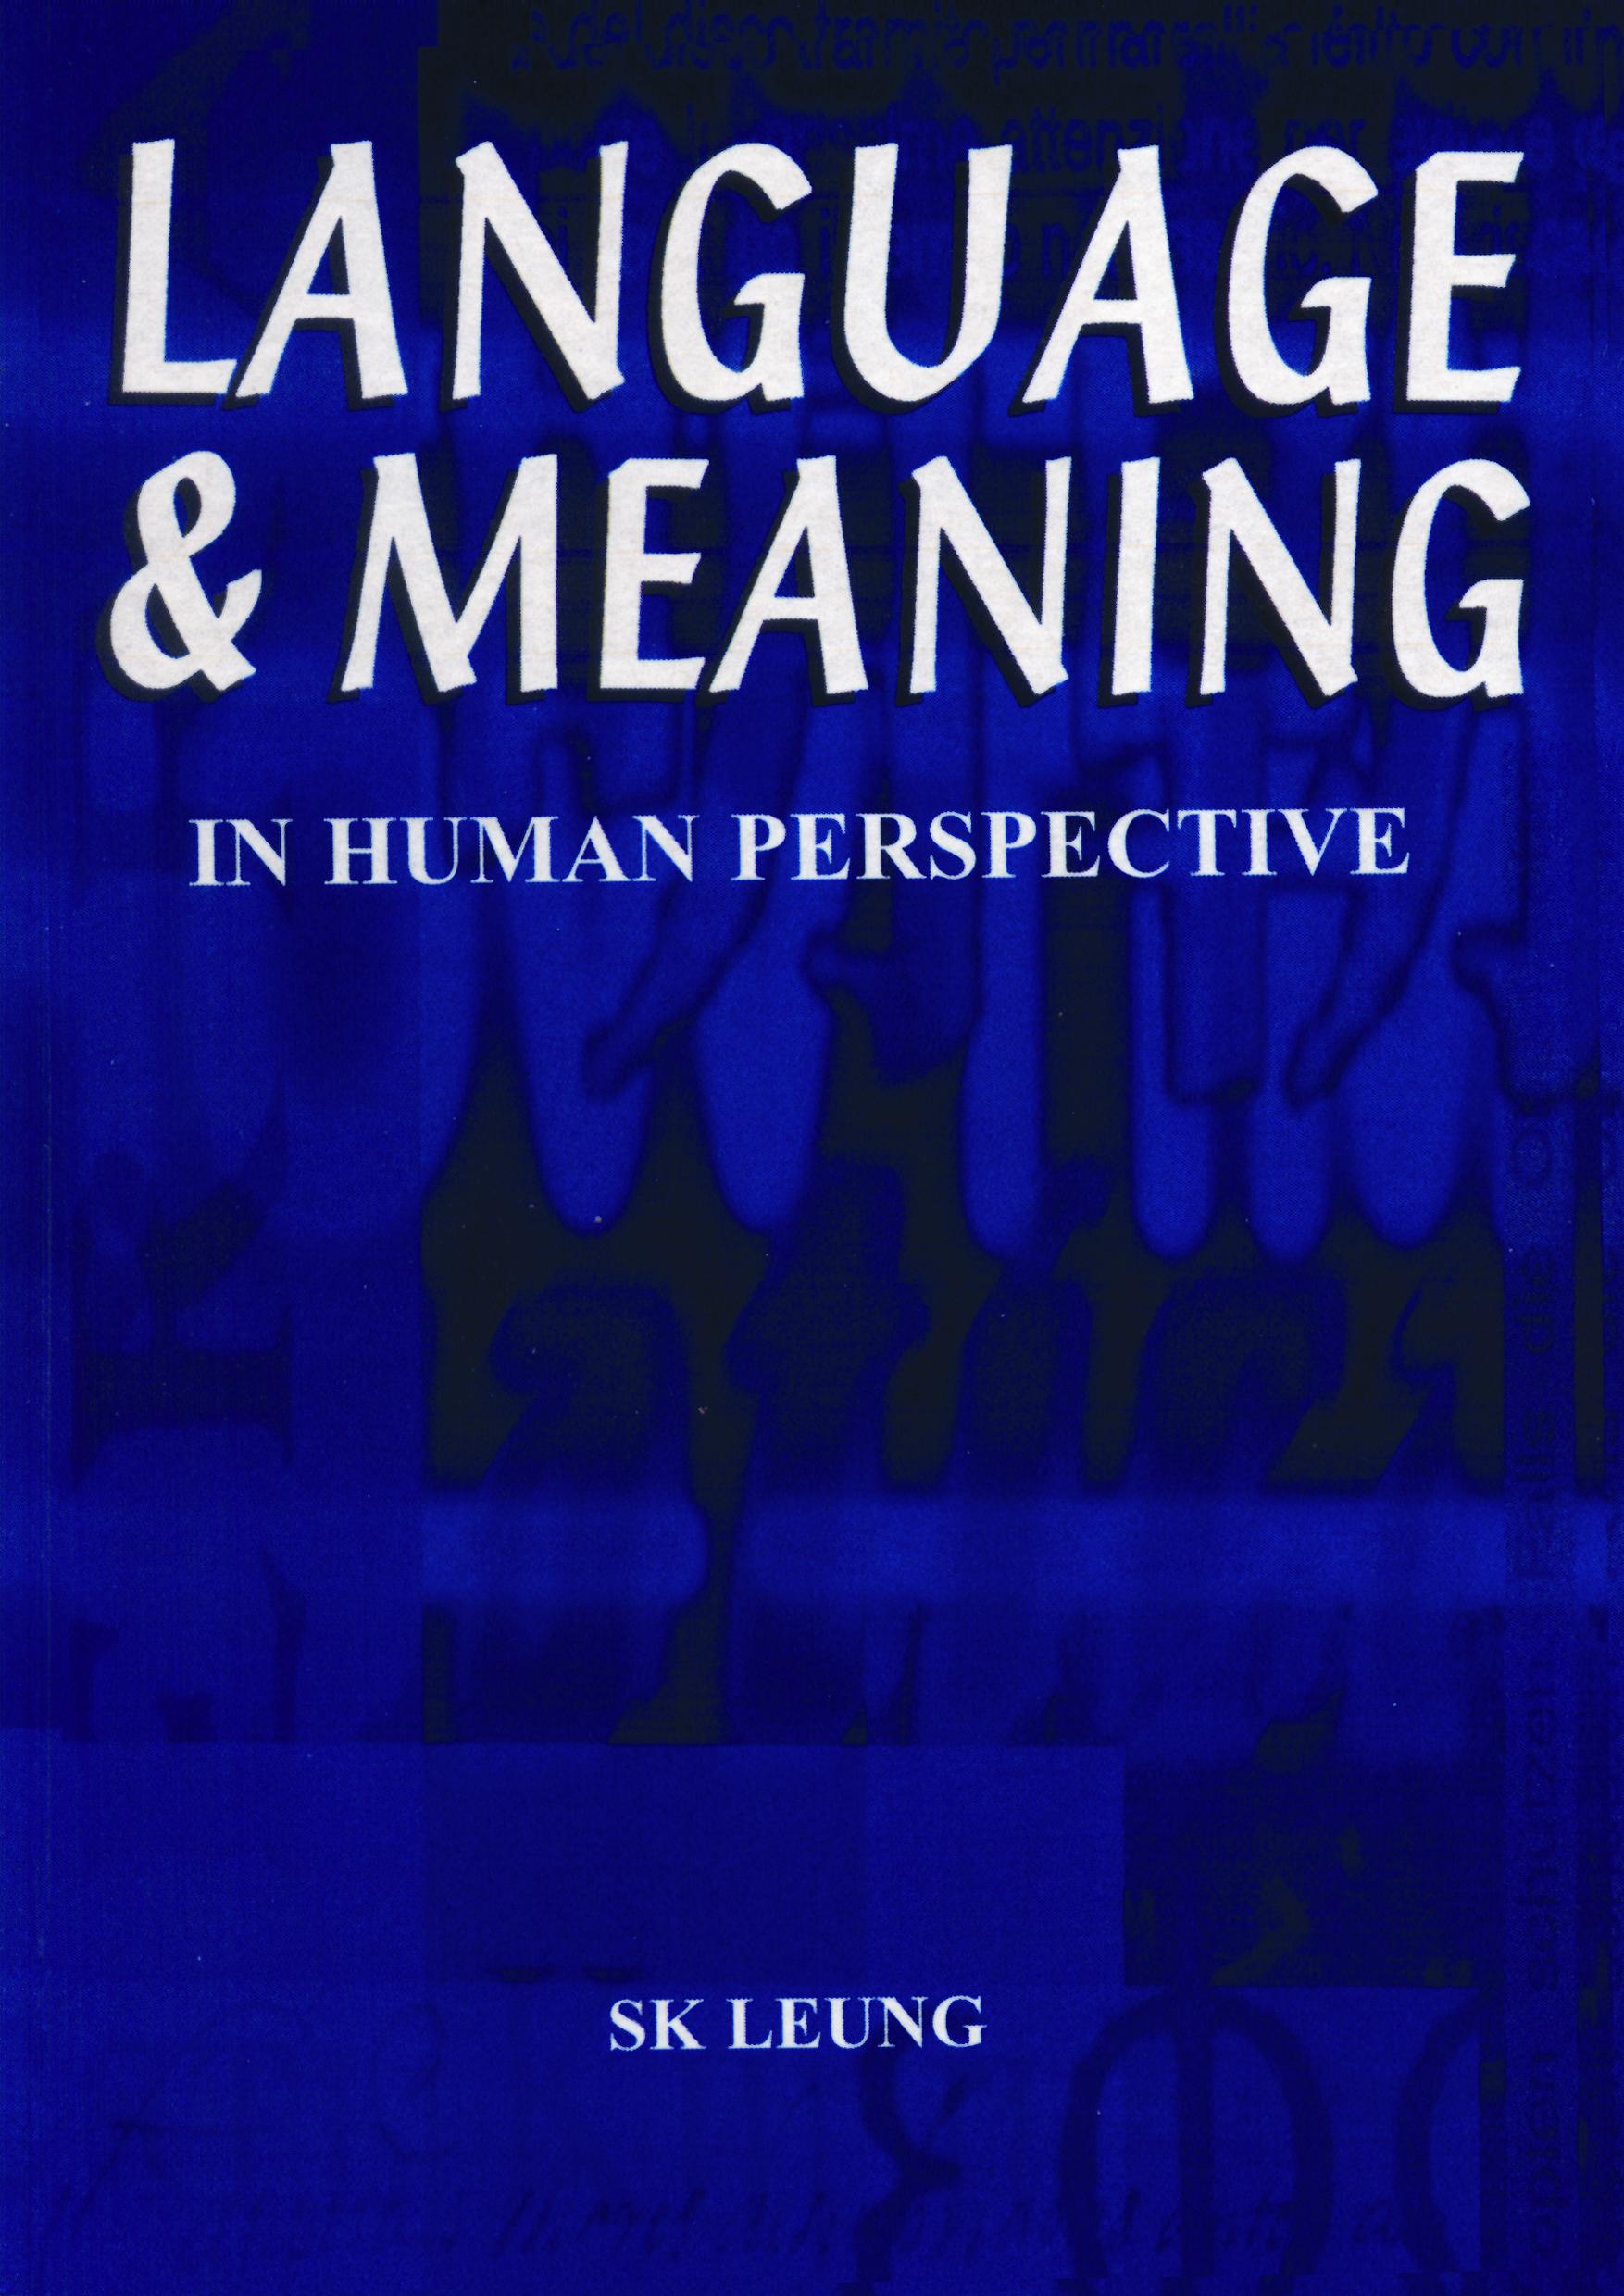 Language & Meaning